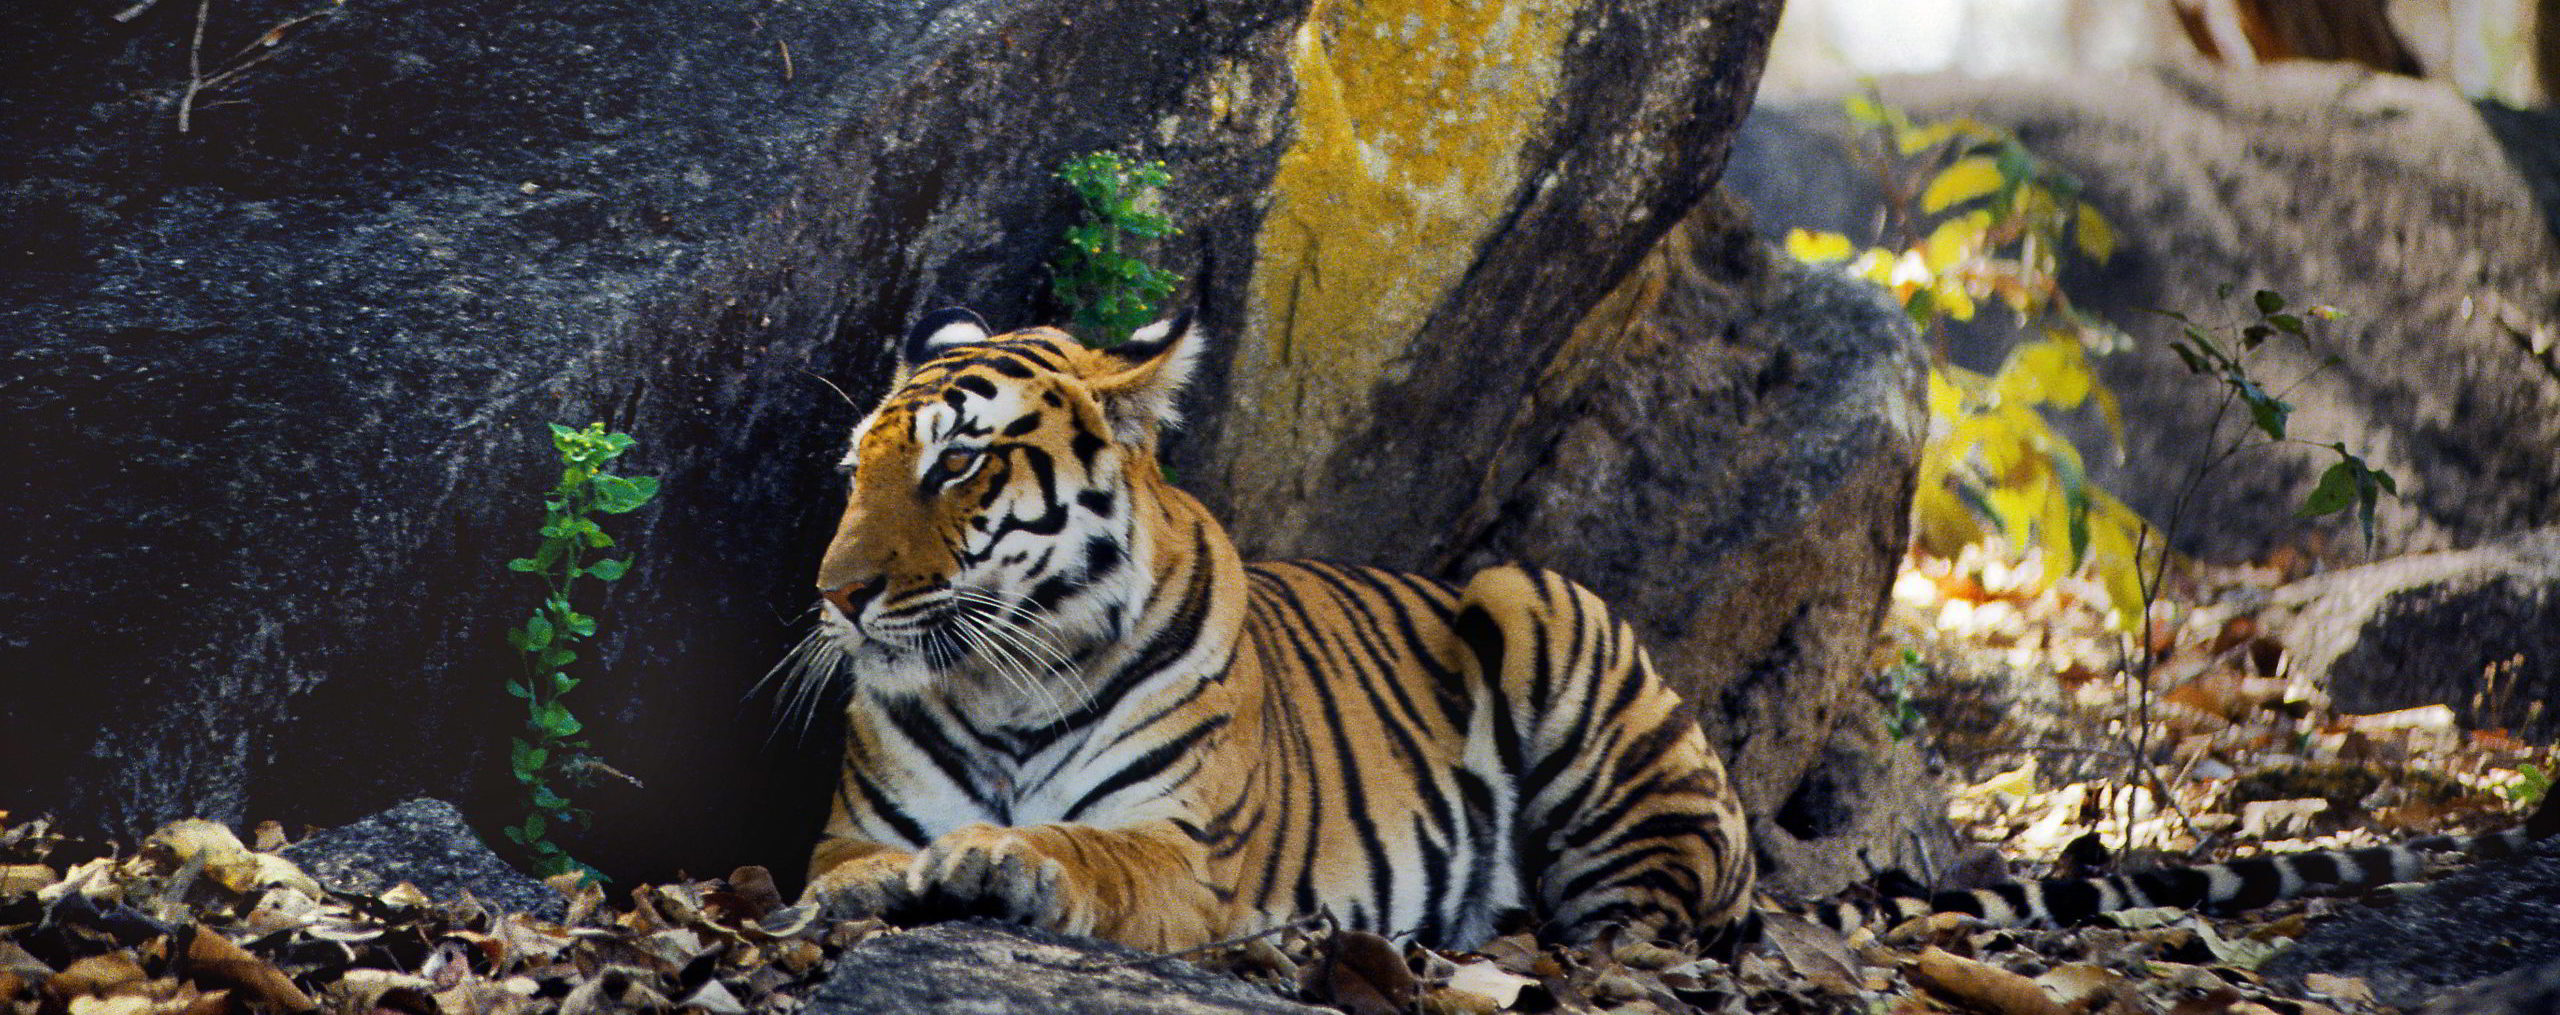 Tiger lying down next to a rock